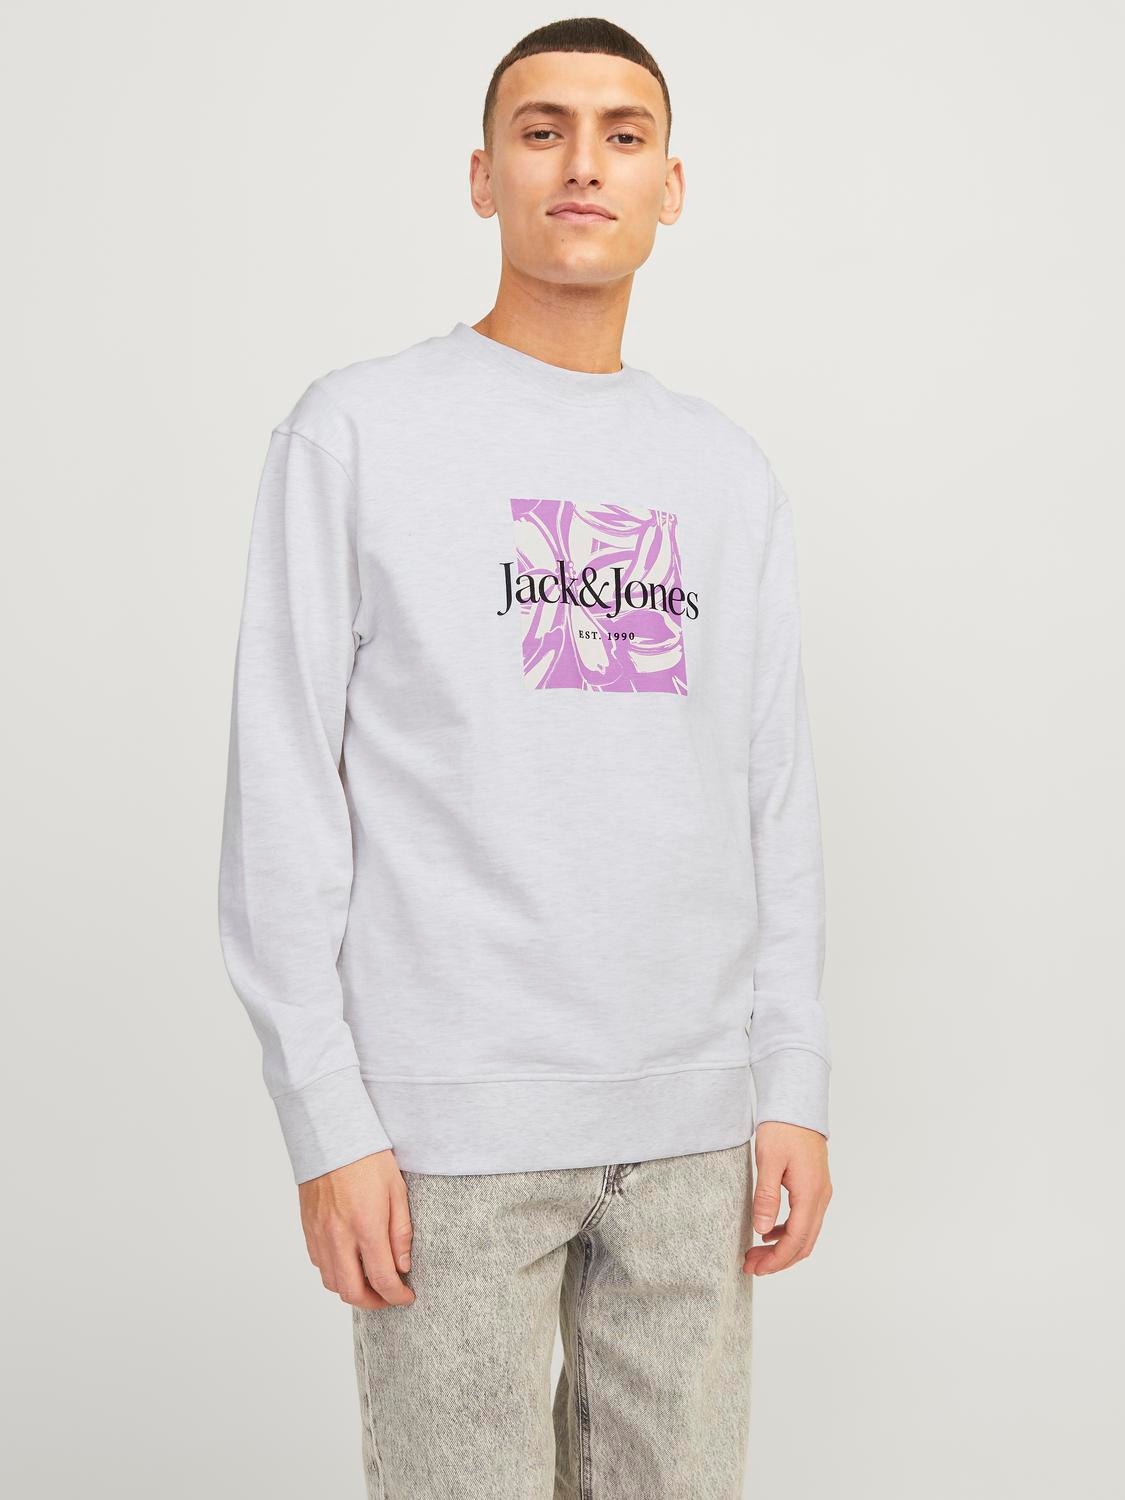 Jack & Jones Printed Crewn Neck Sweatshirt -White Melange - 12253652